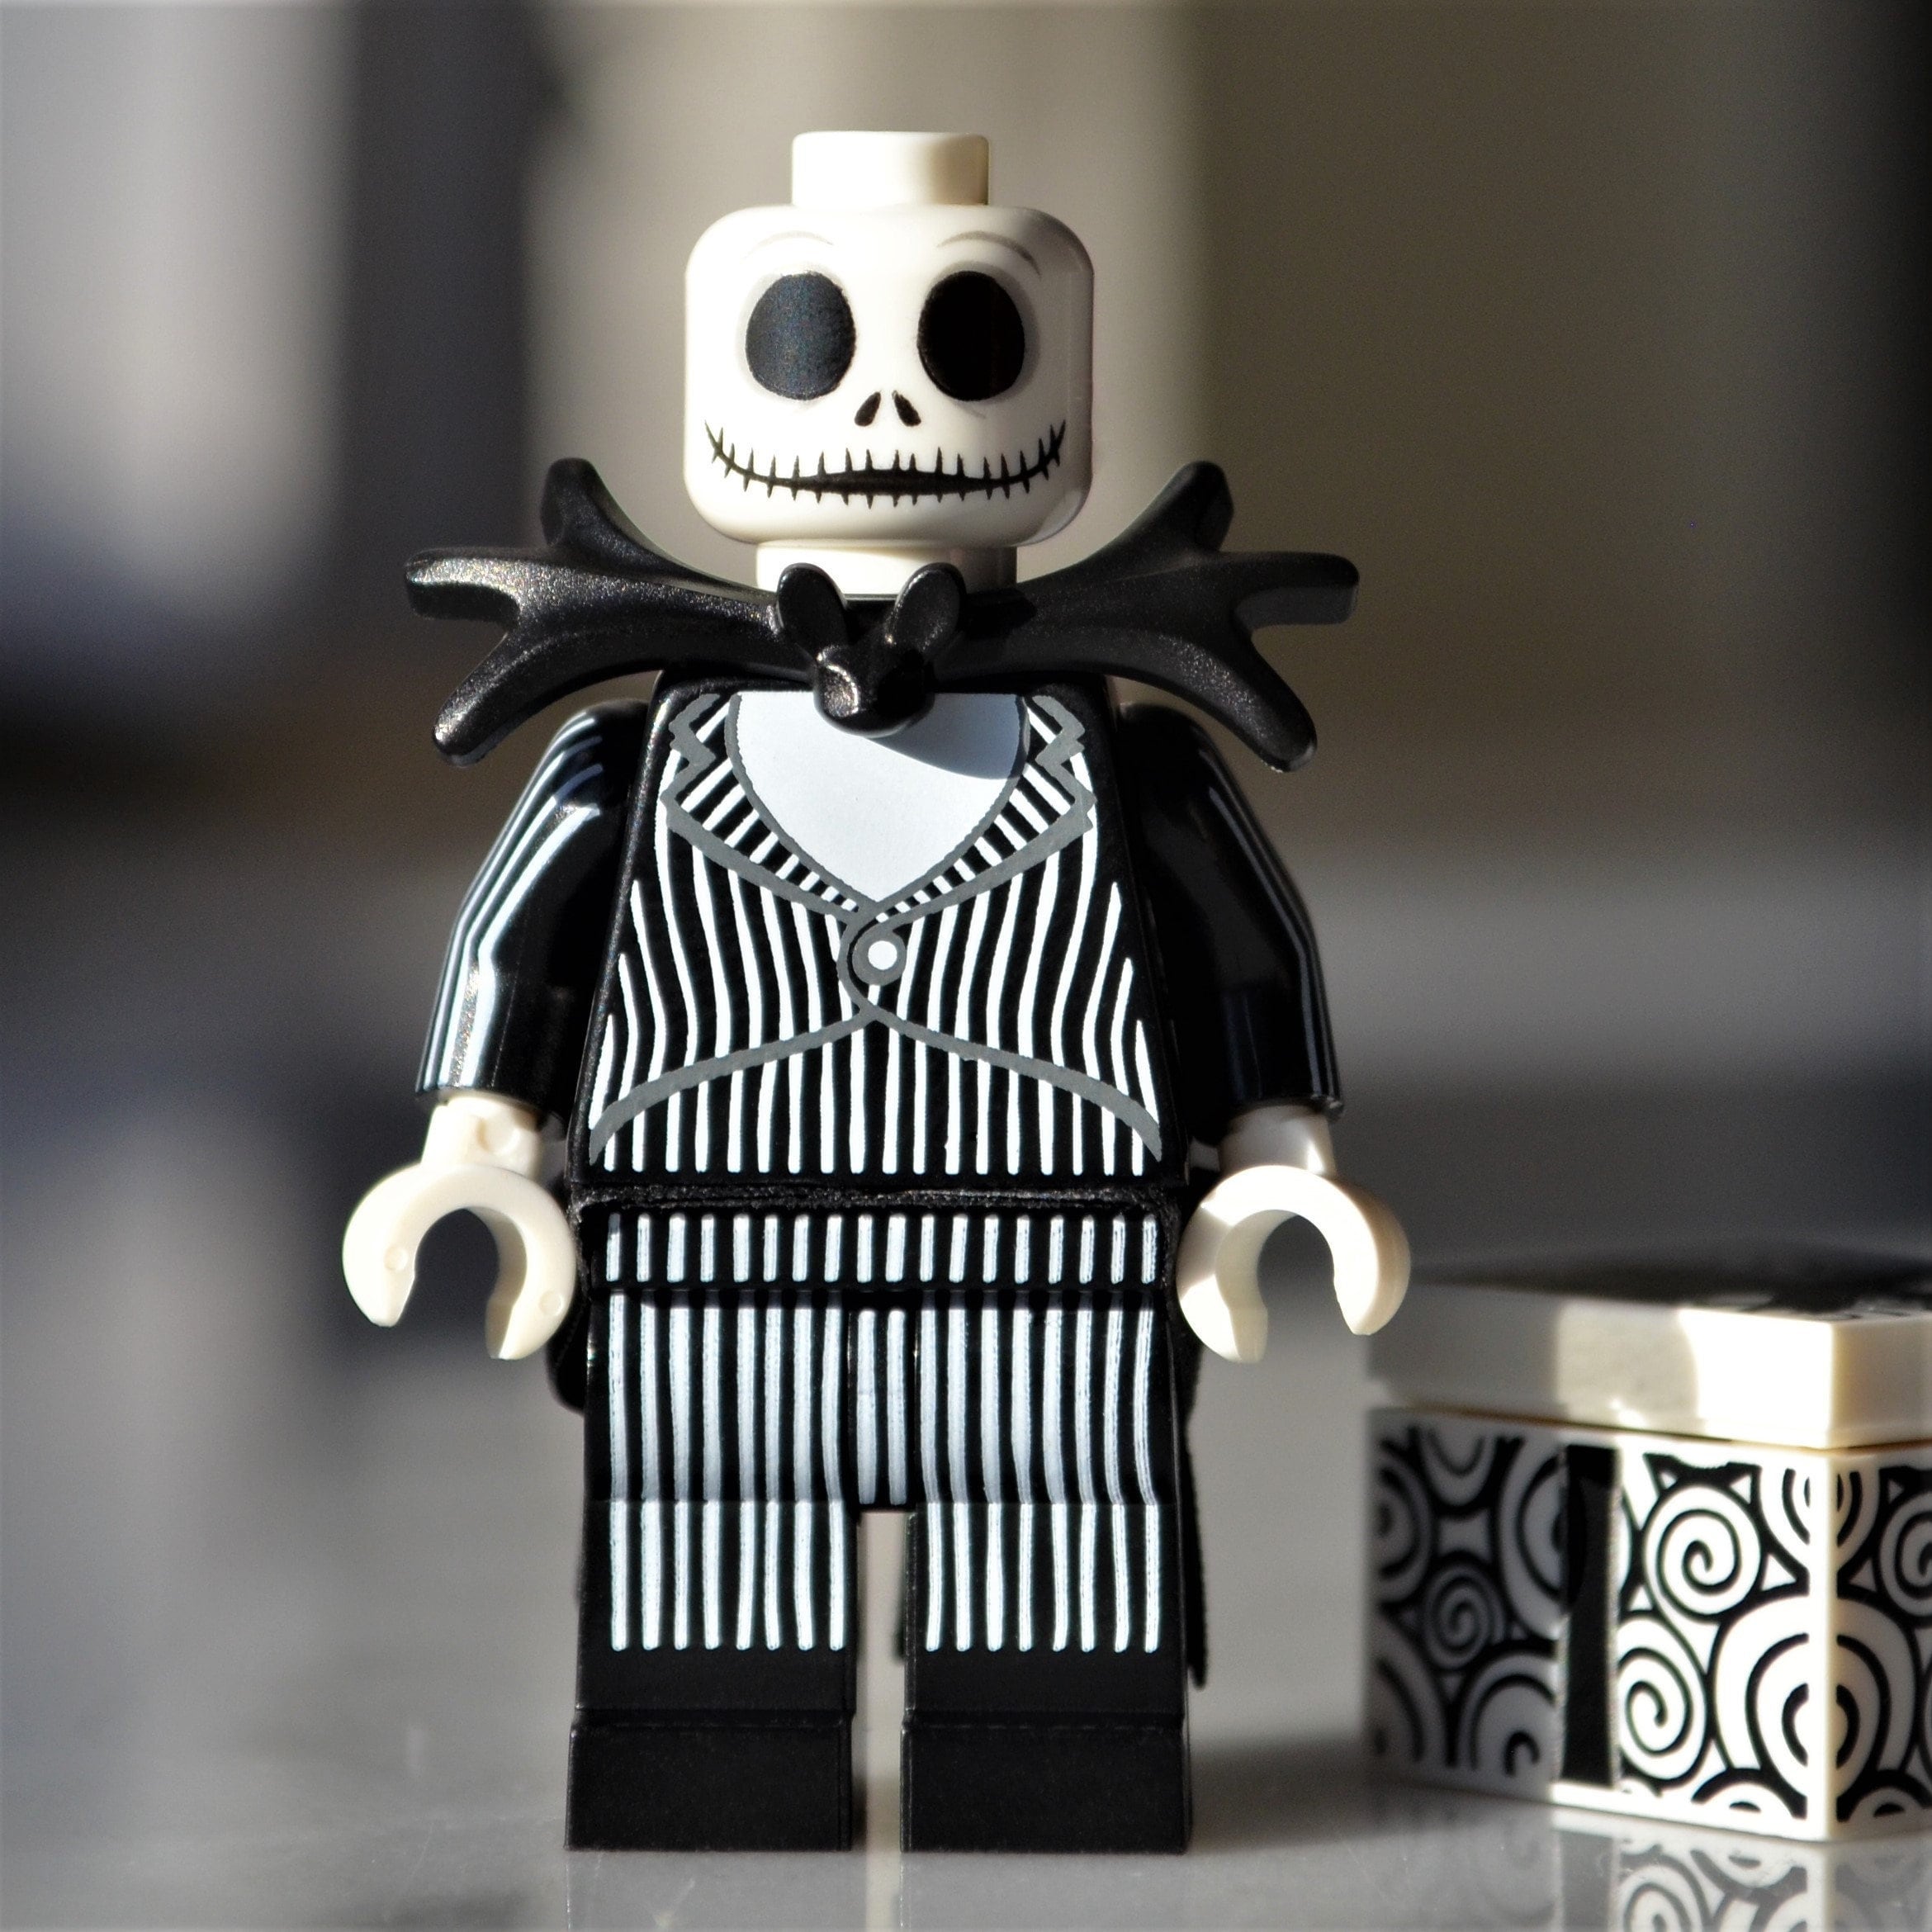 Tim Burton's The Nightmare Before Christmas Lego Minifigures